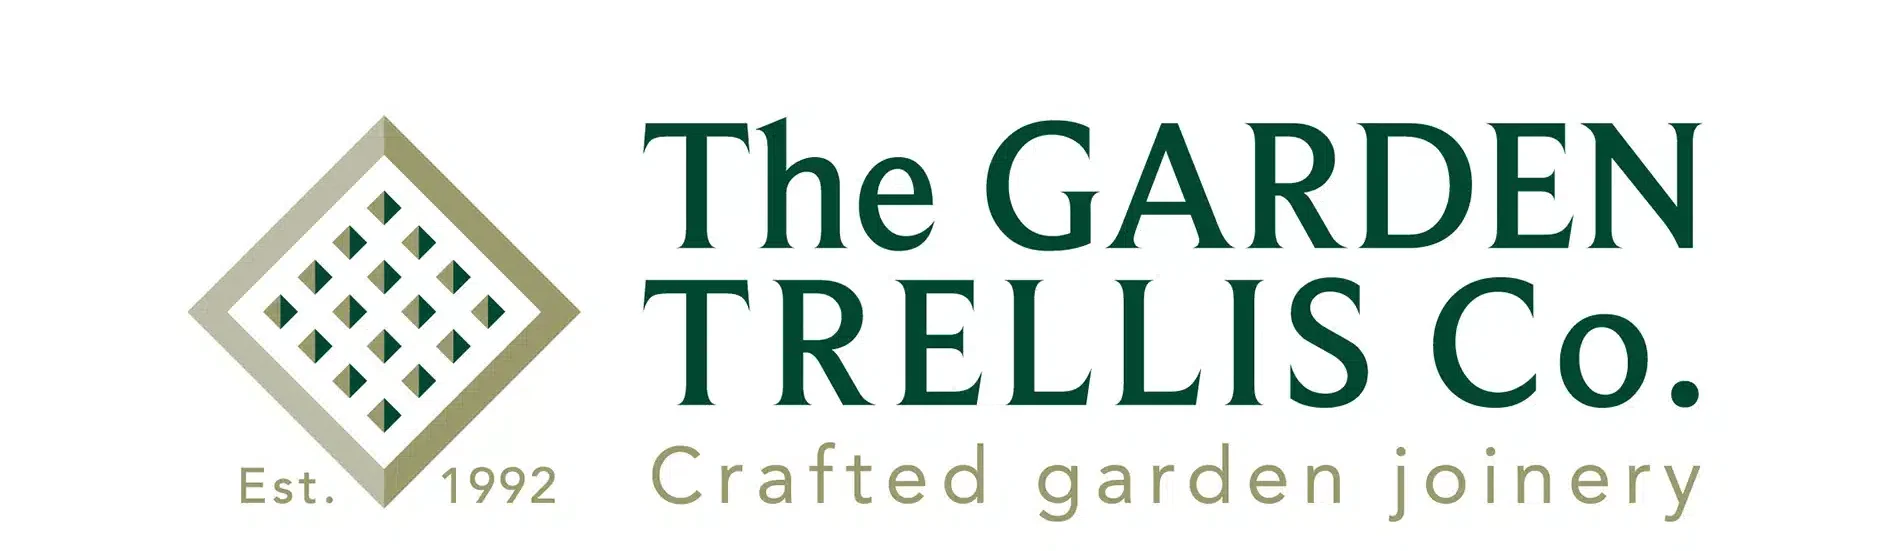 The Garden Trellis Co. boasts the most beautiful trellis with its british craftsmanship